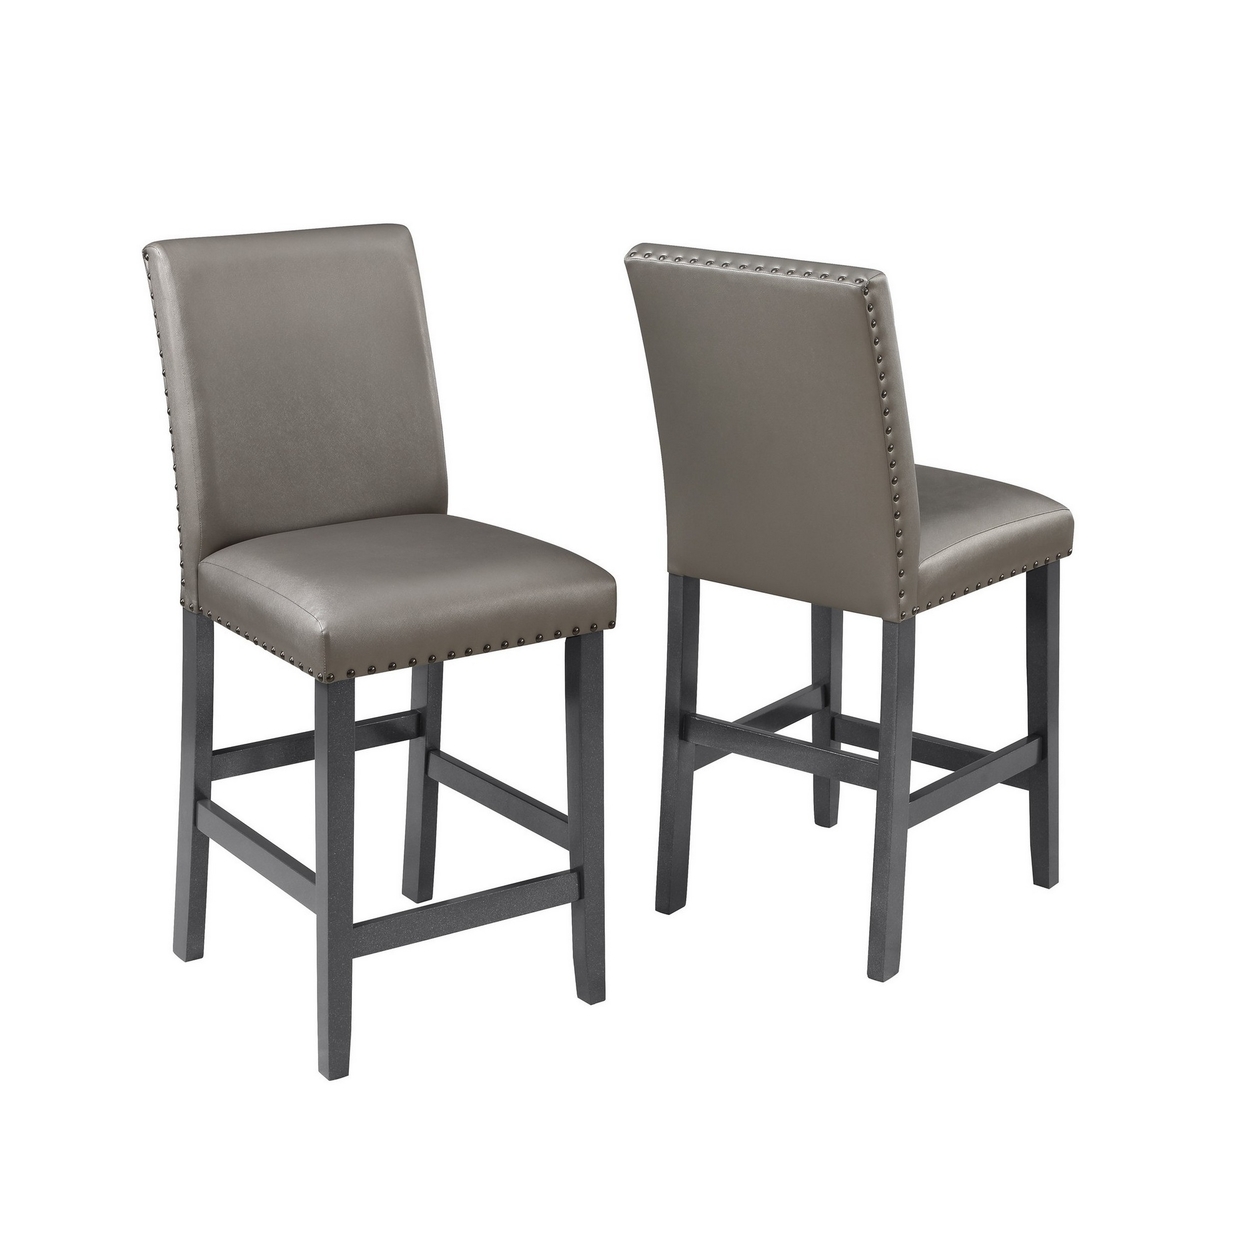 Scarlett 26 Inch Counter Height Chair Set Of 2, Plush Gray Faux Leather -Saltoro Sherpi